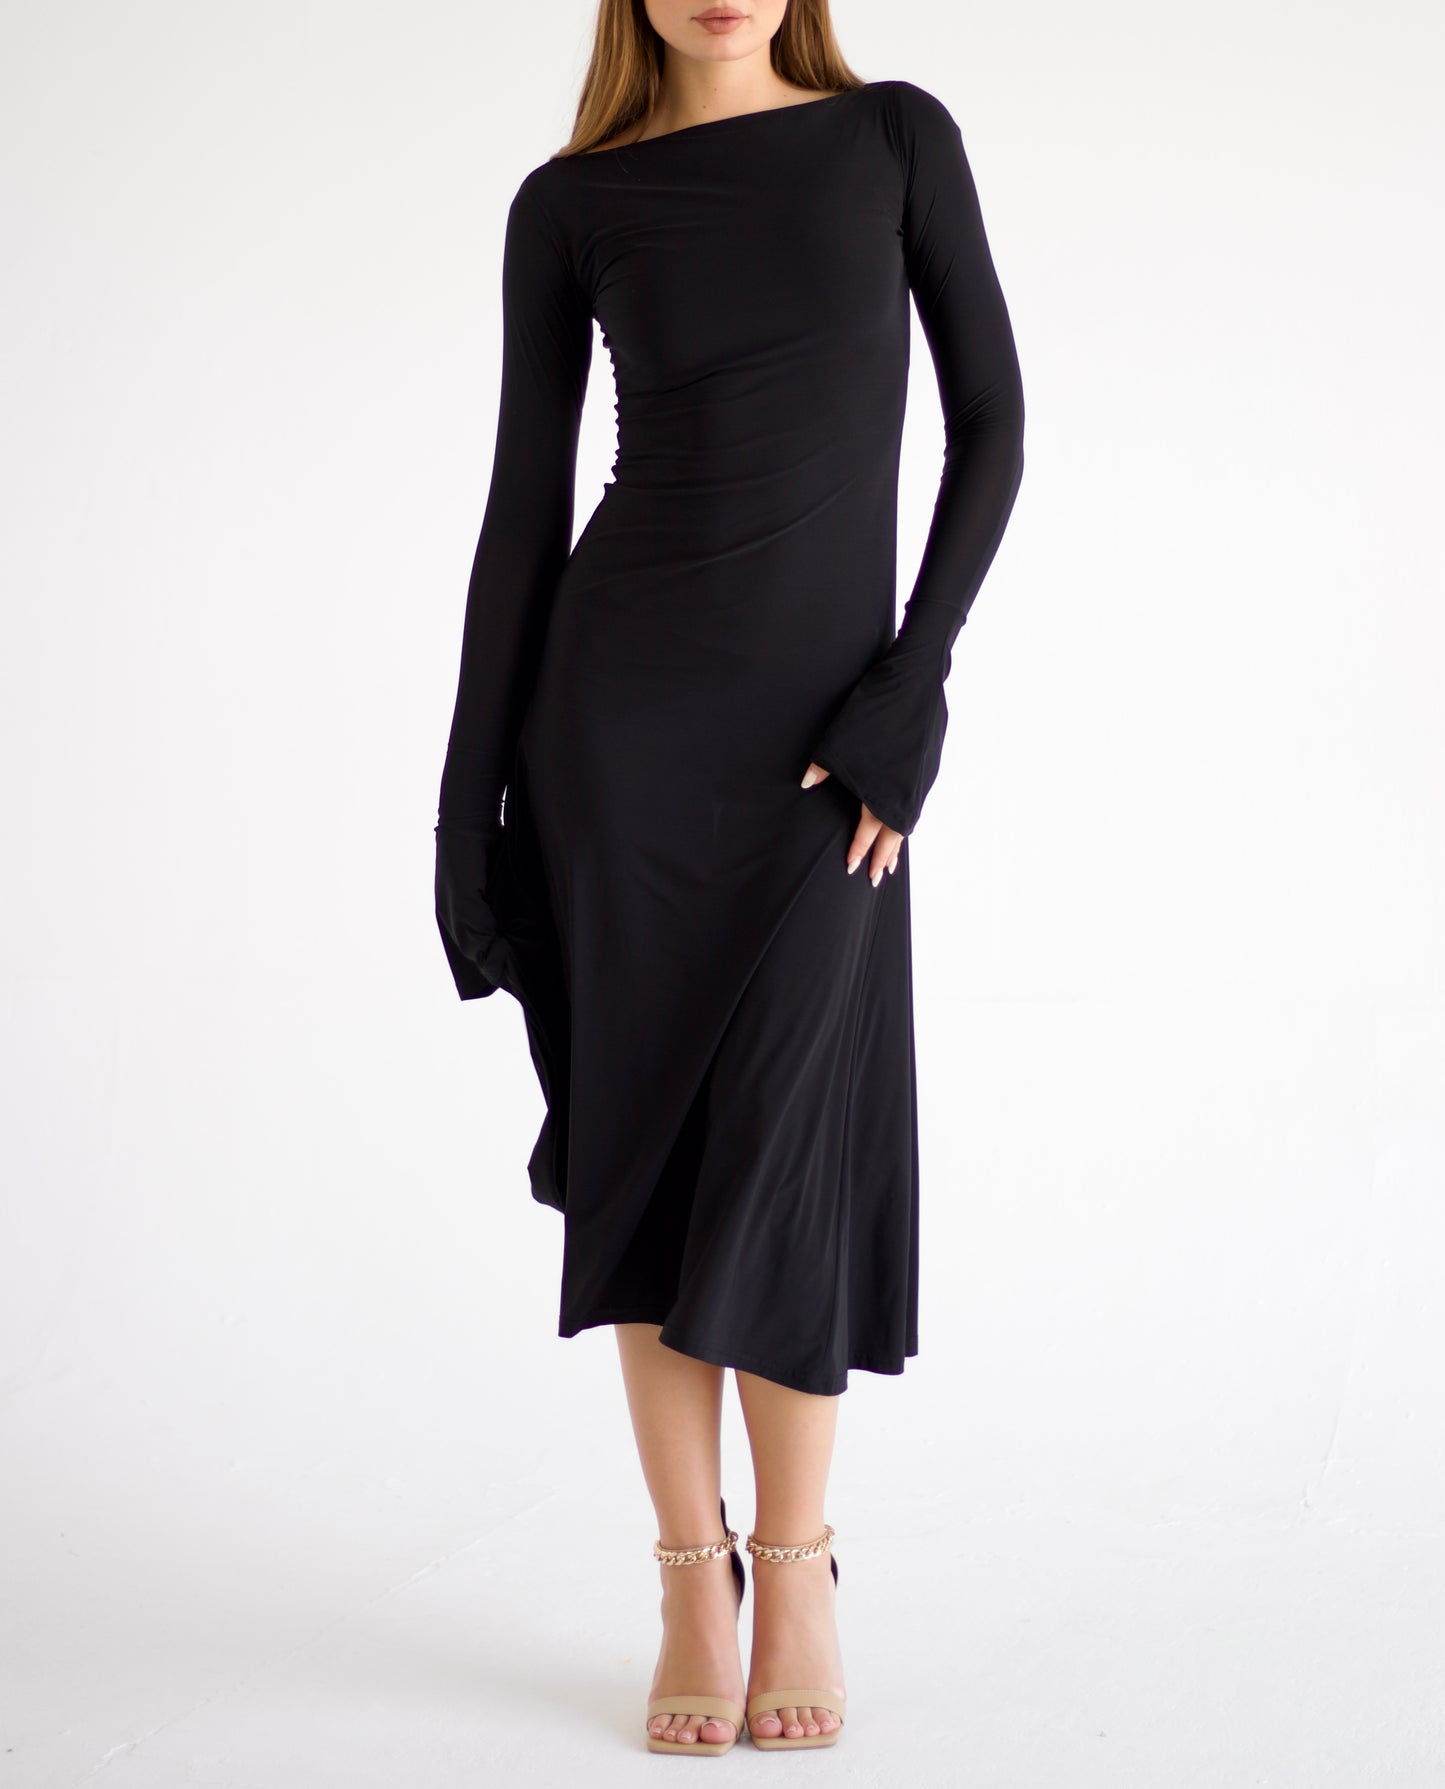 Black kate dress